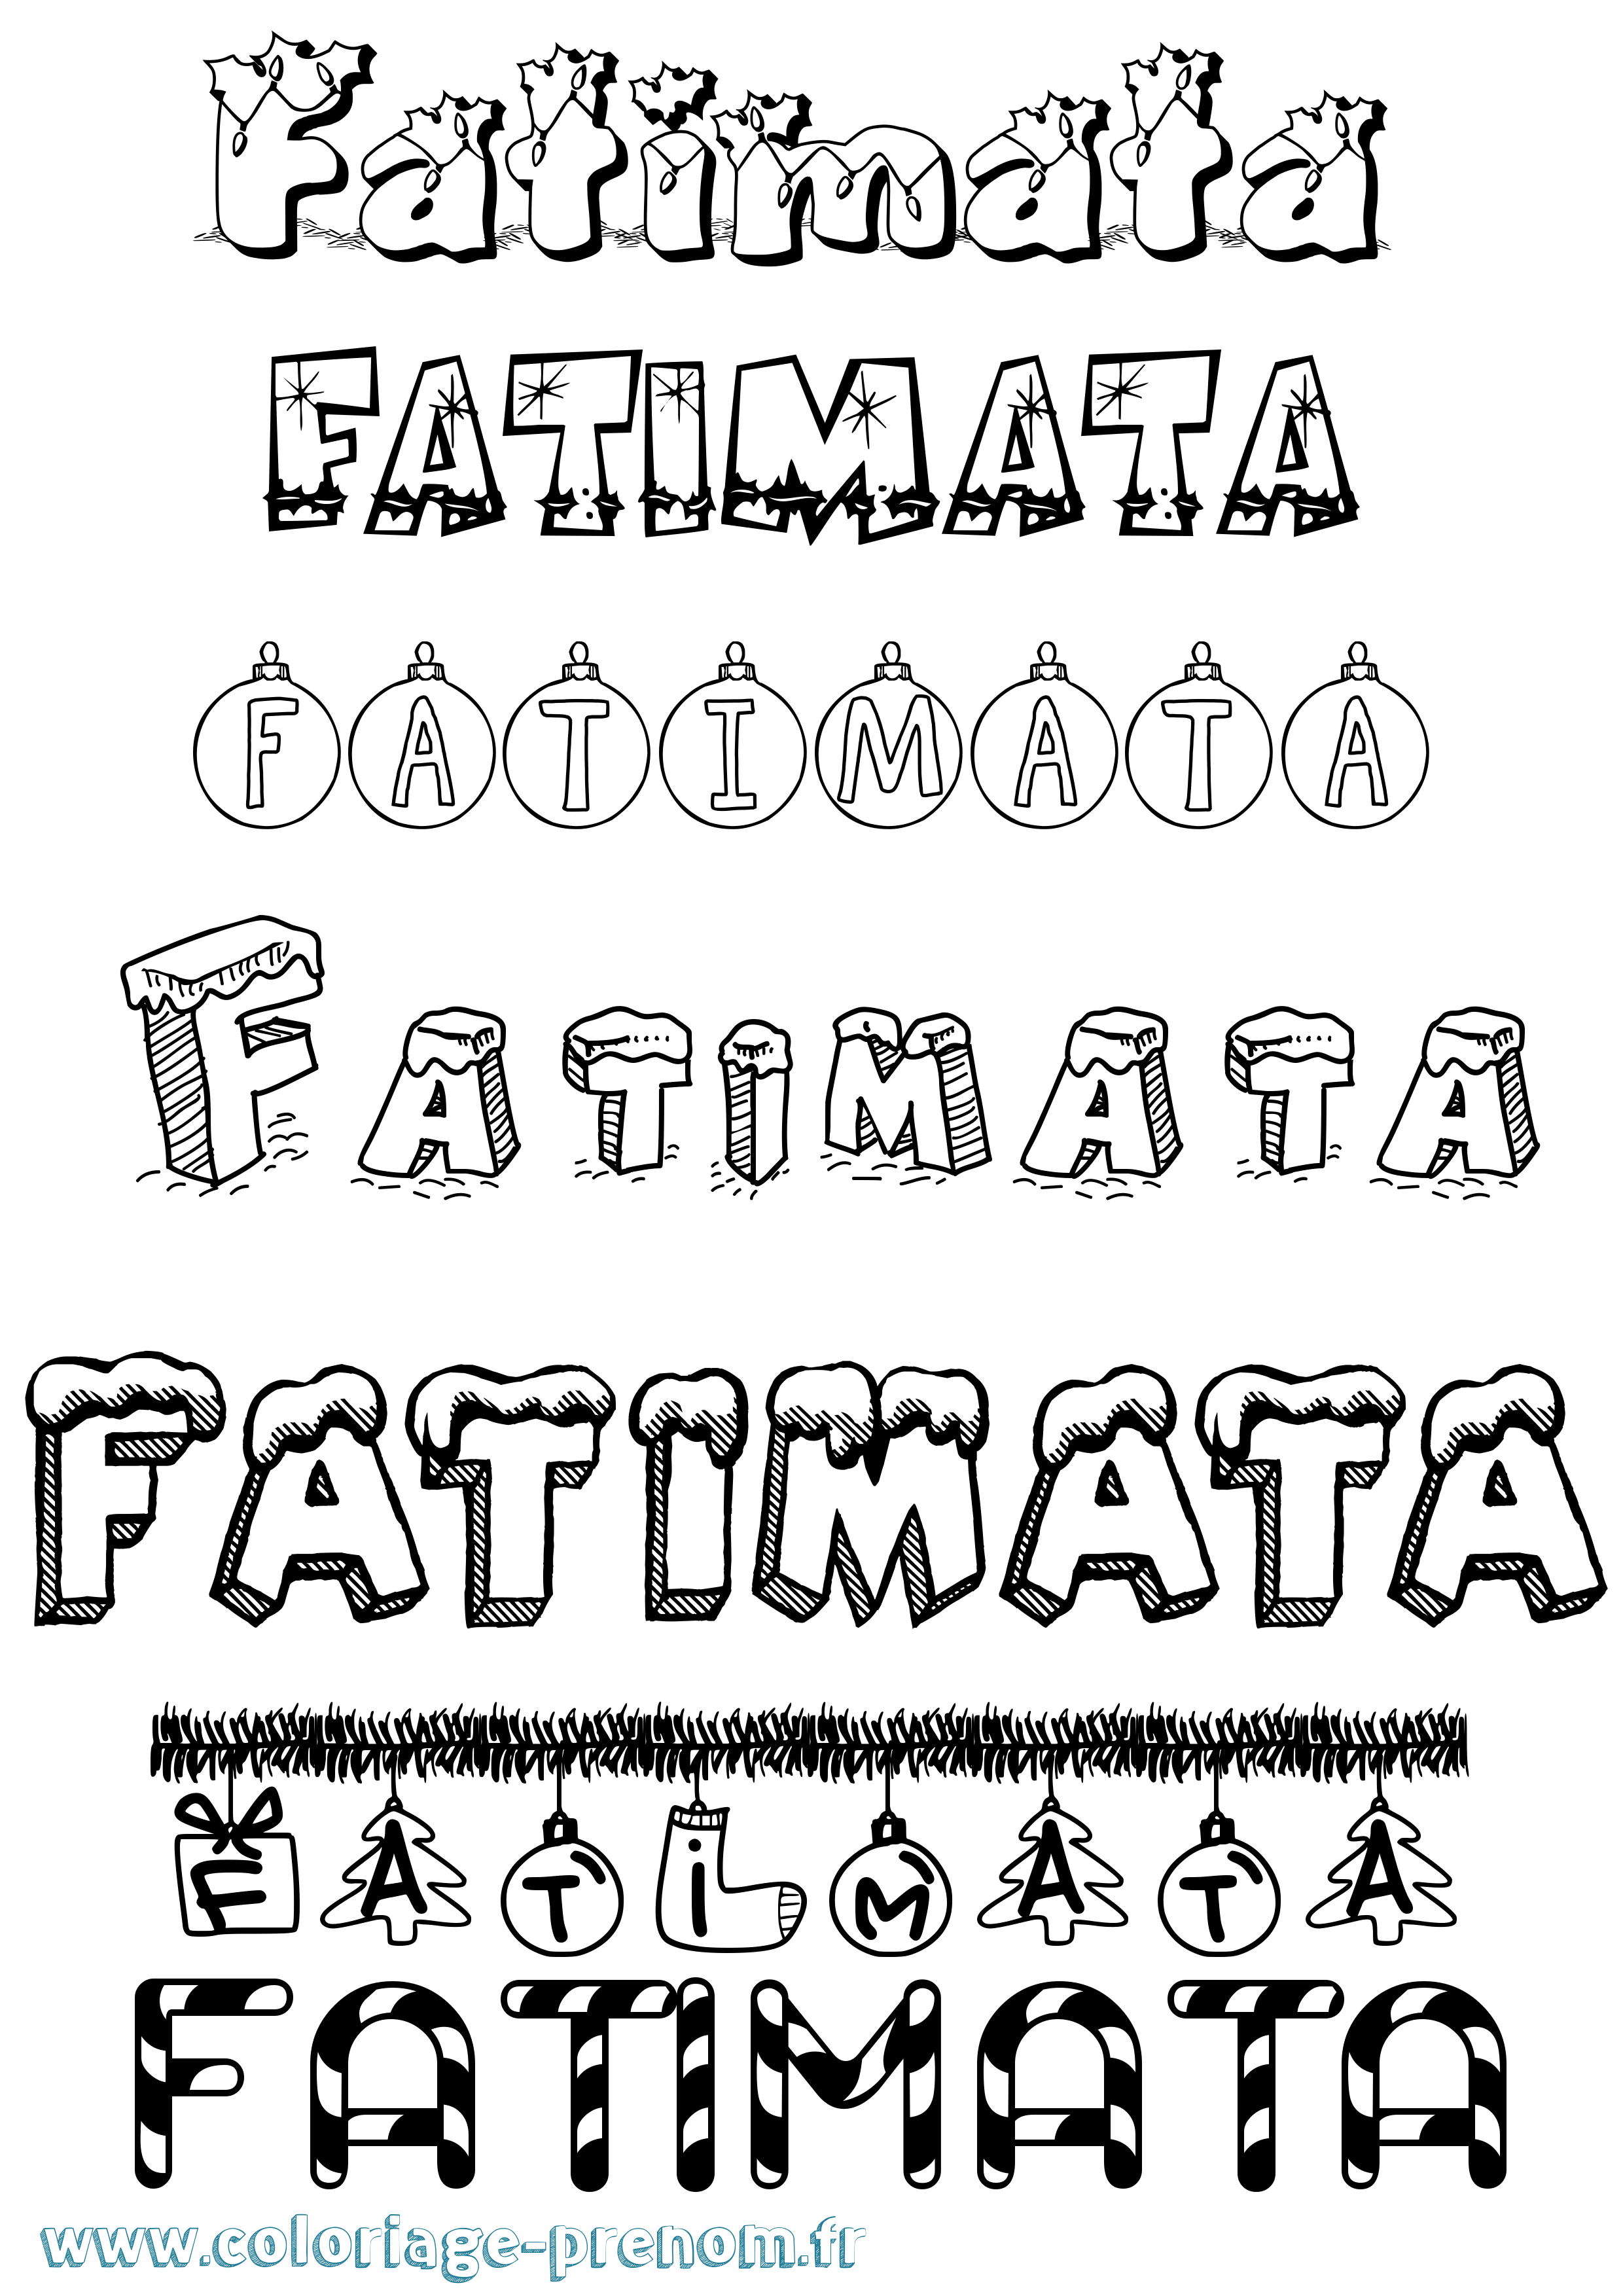 Coloriage prénom Fatimata